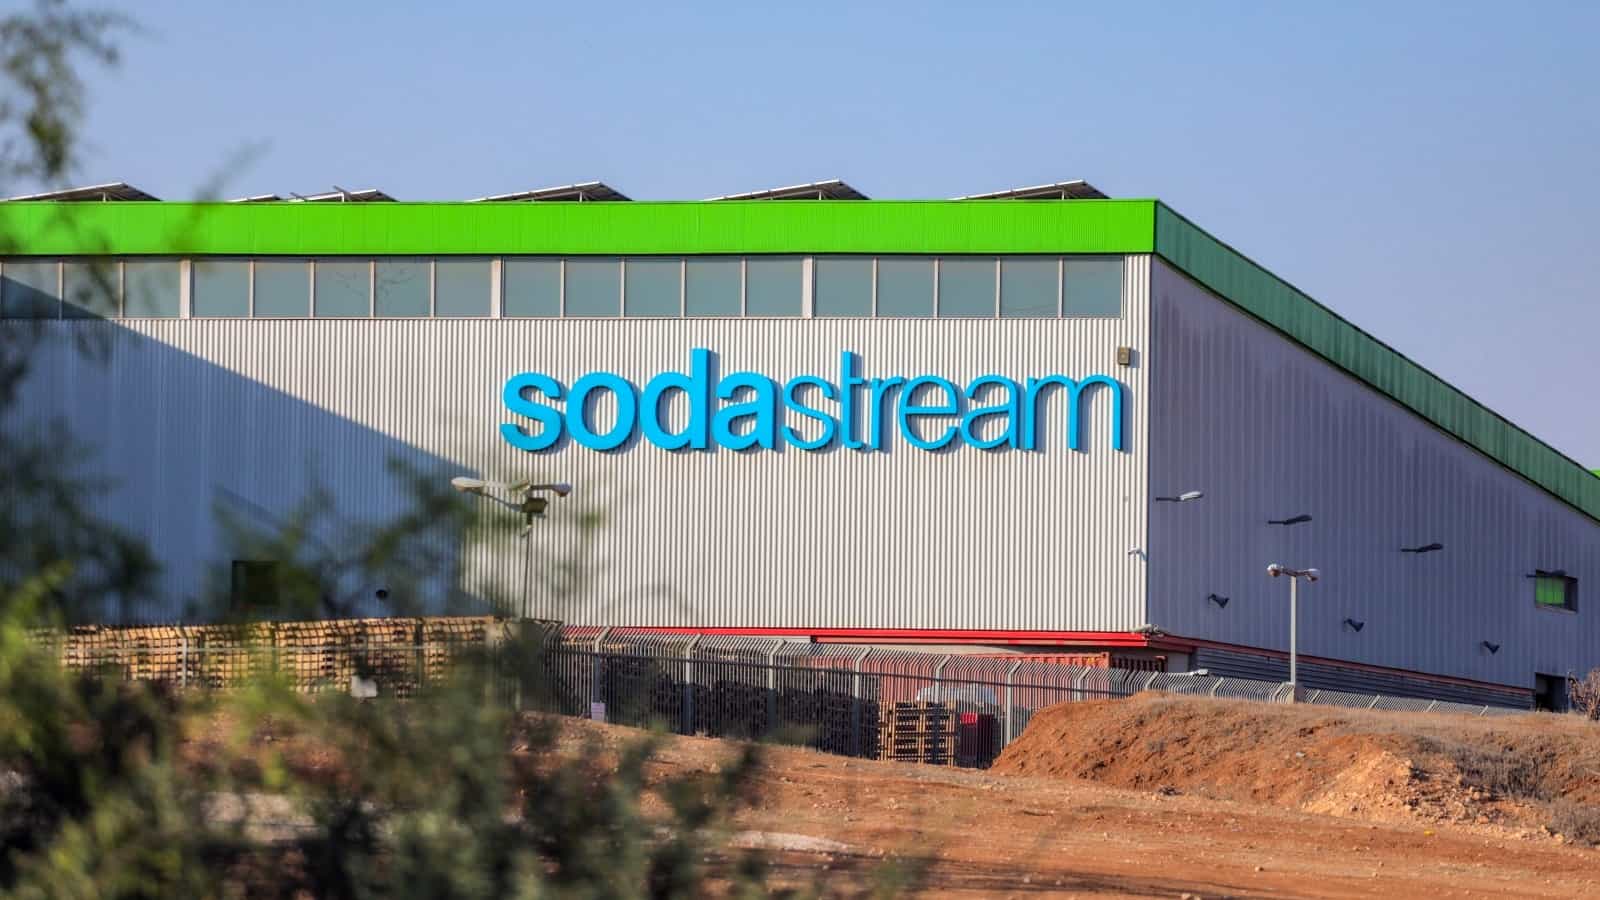 SodaStreamâ€™s production facility in southern Israel. Photo by MagioreStock via Shutterstock.com